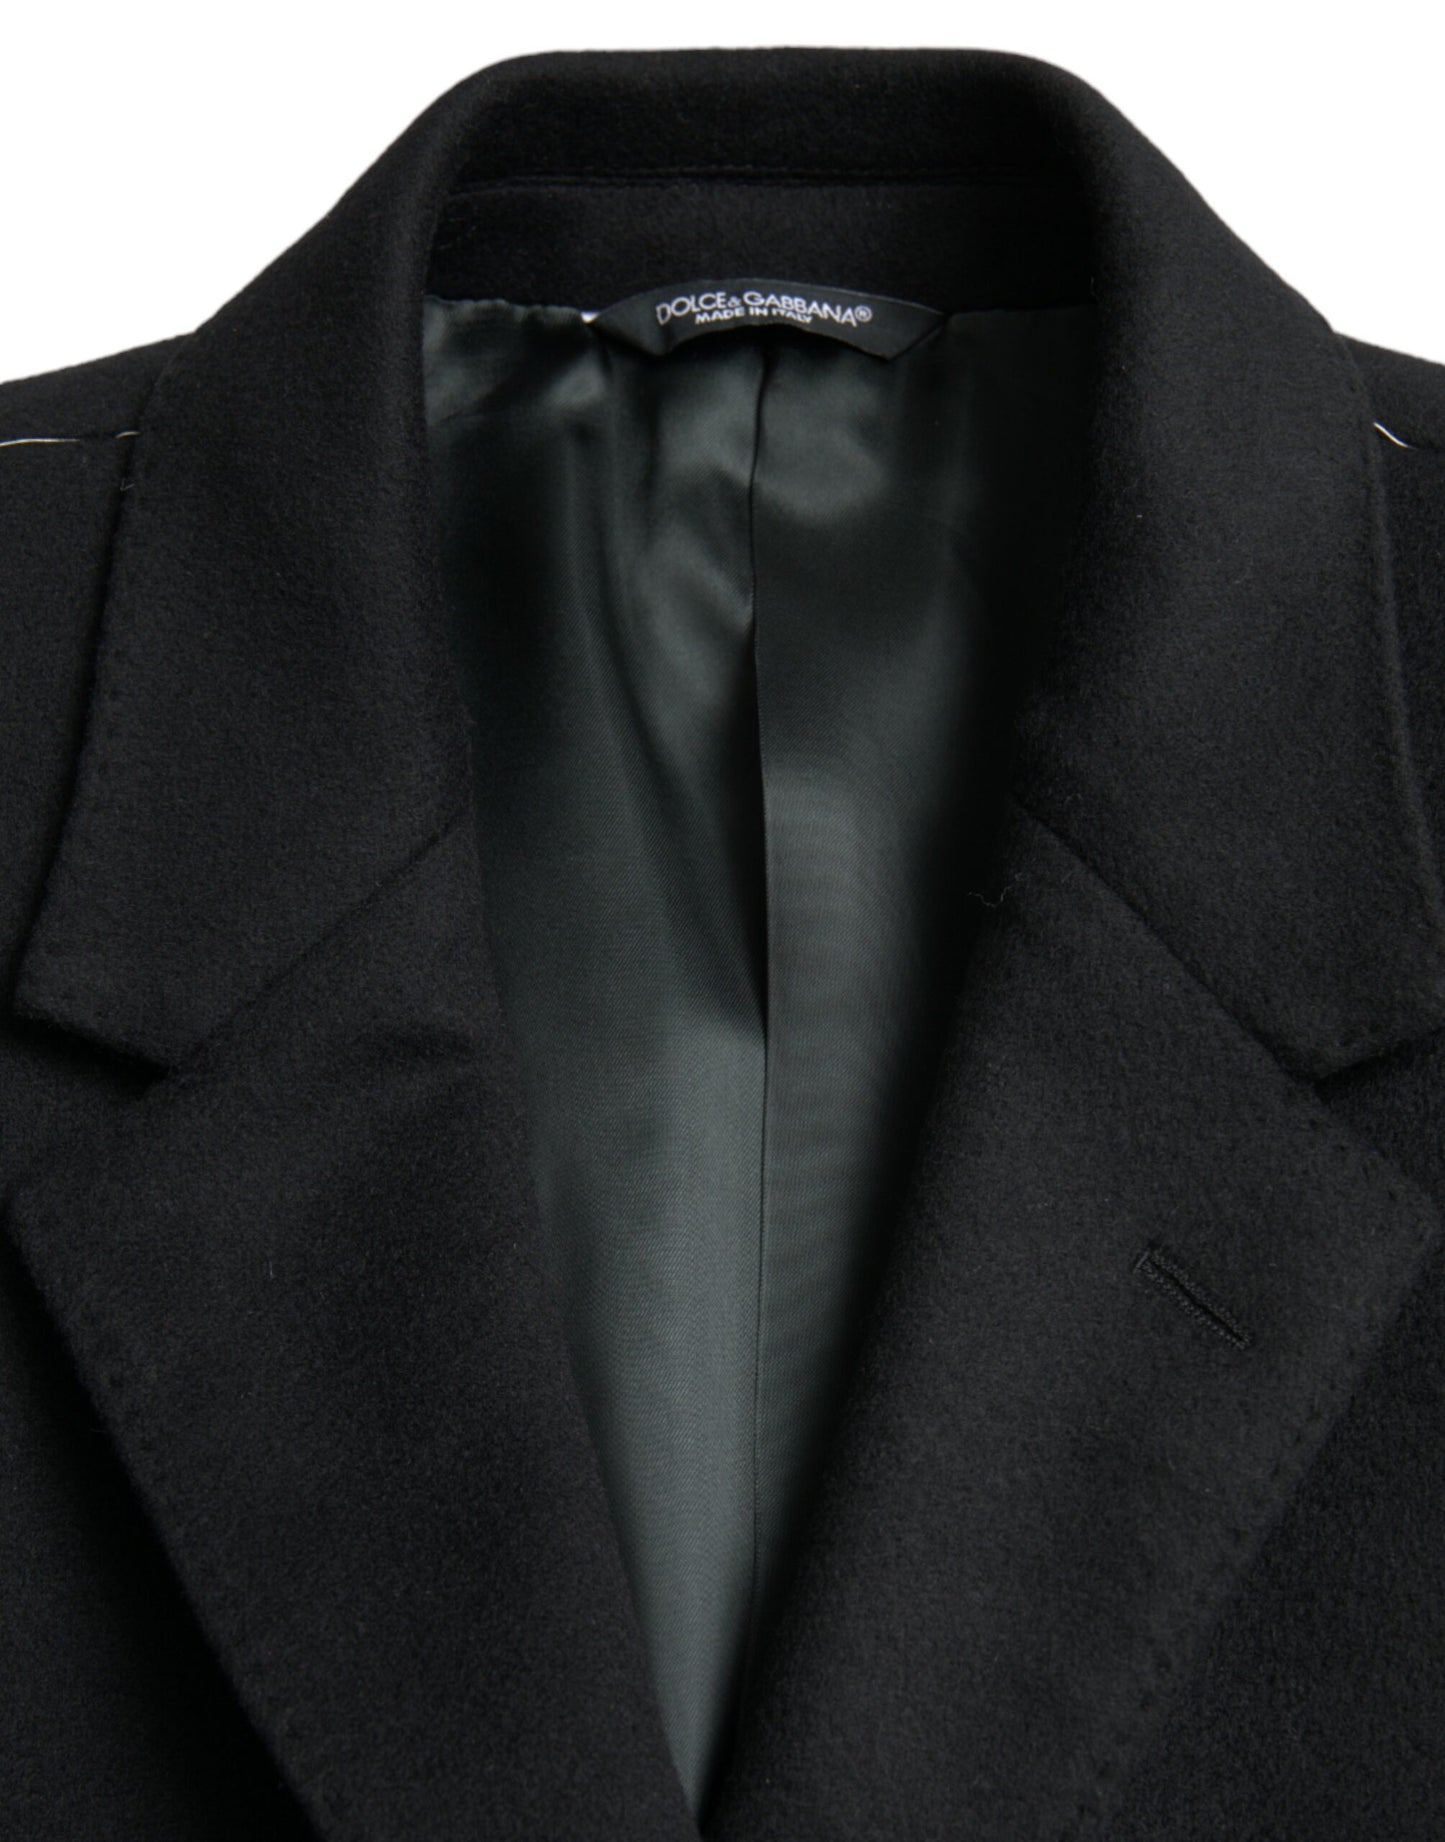 Dolce & Gabbana Black Wool Cashmere Coat